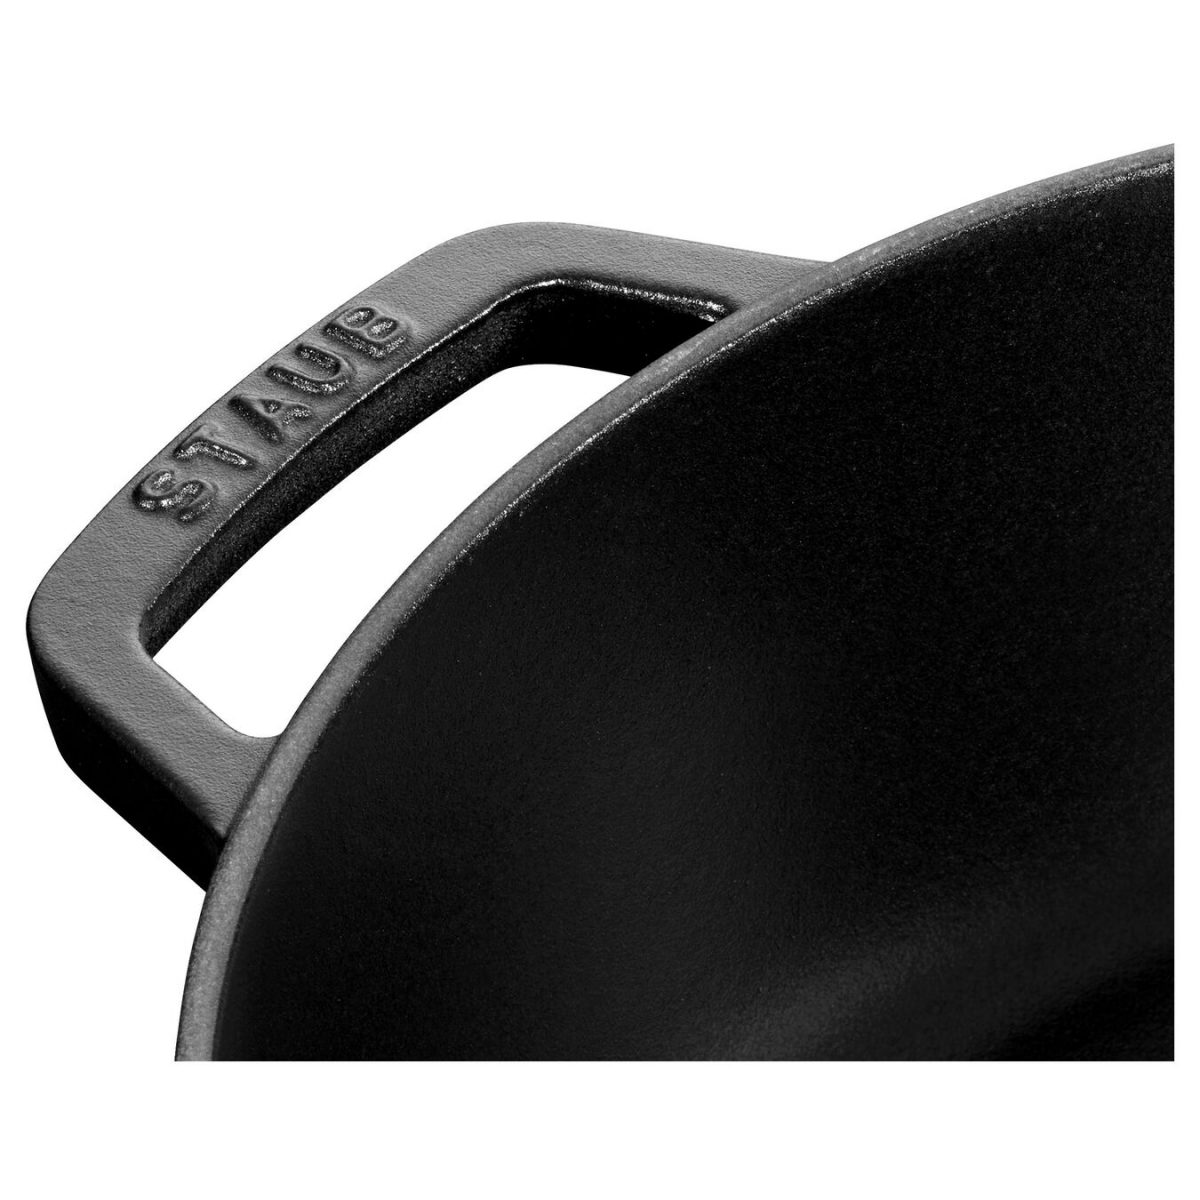 Staub Round Cast Iron Sauté Pan With Chistera Lid 24 cm Black